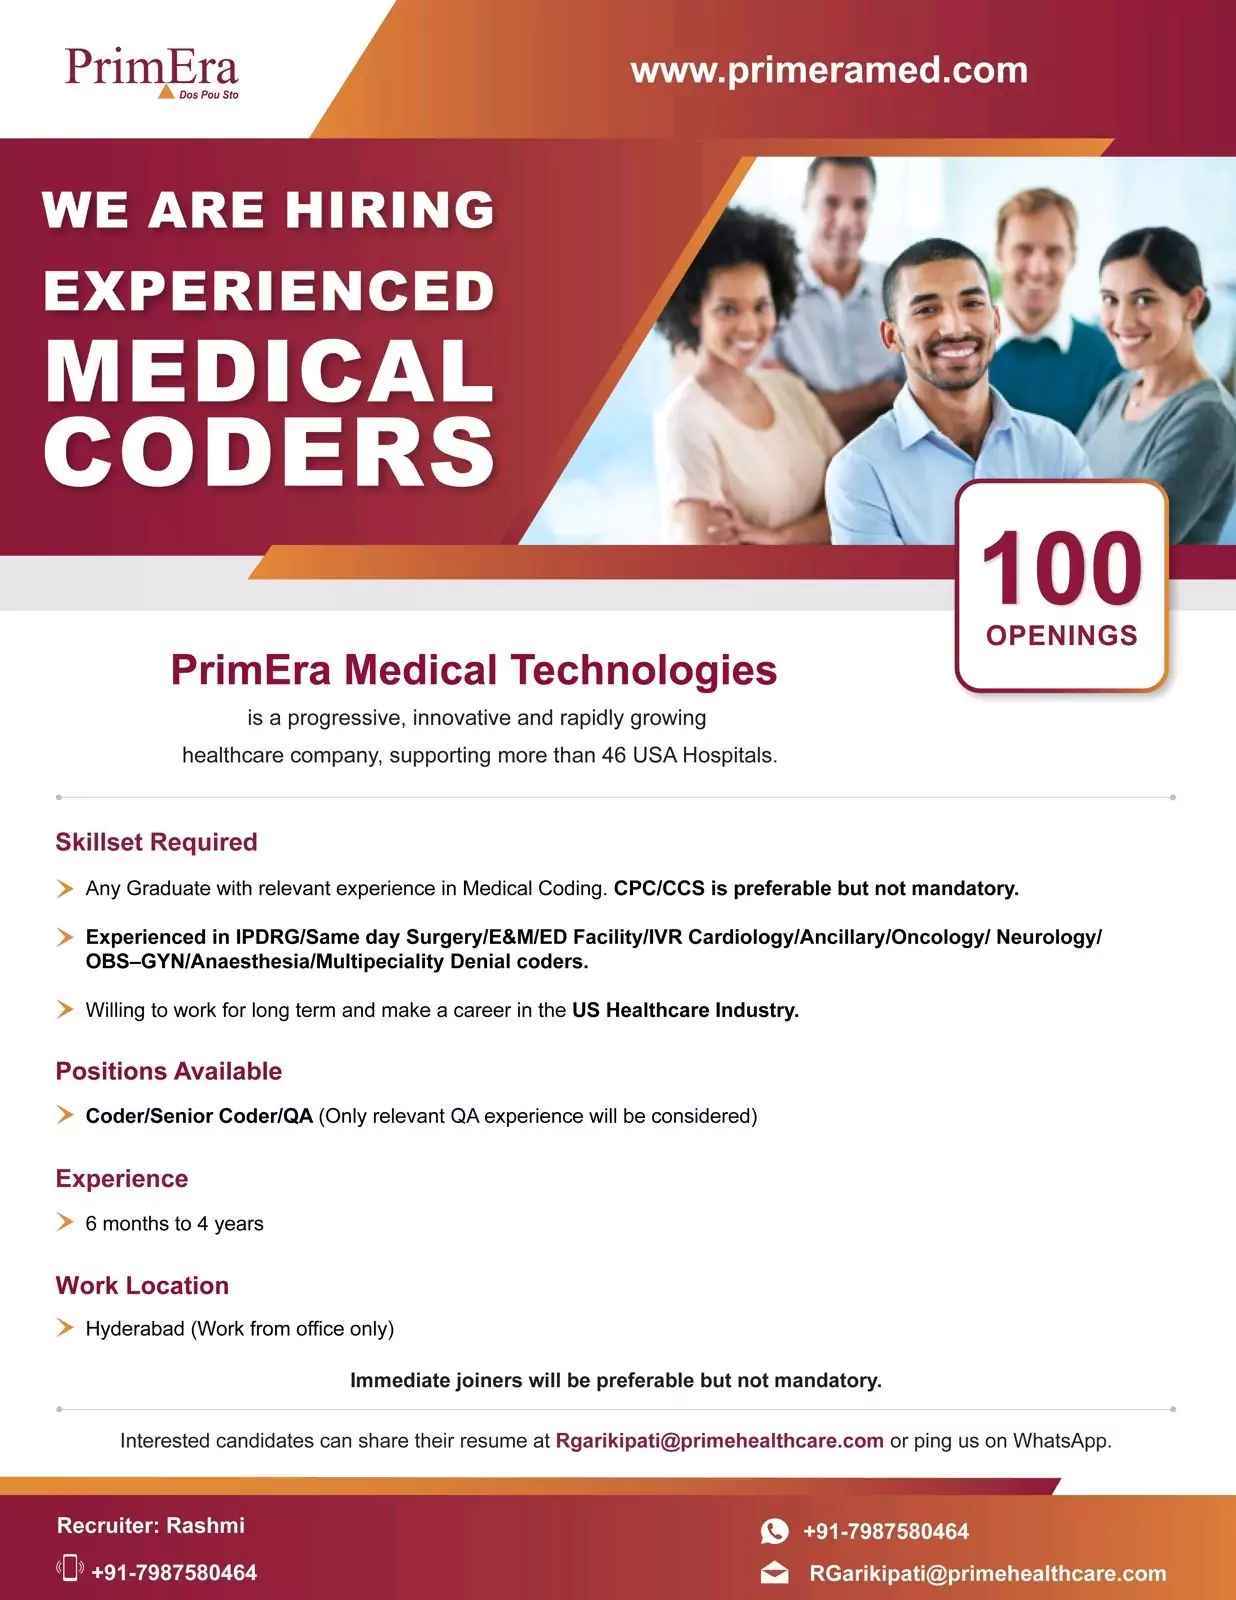 PrimEra Medical coding job openings in Hyderabad